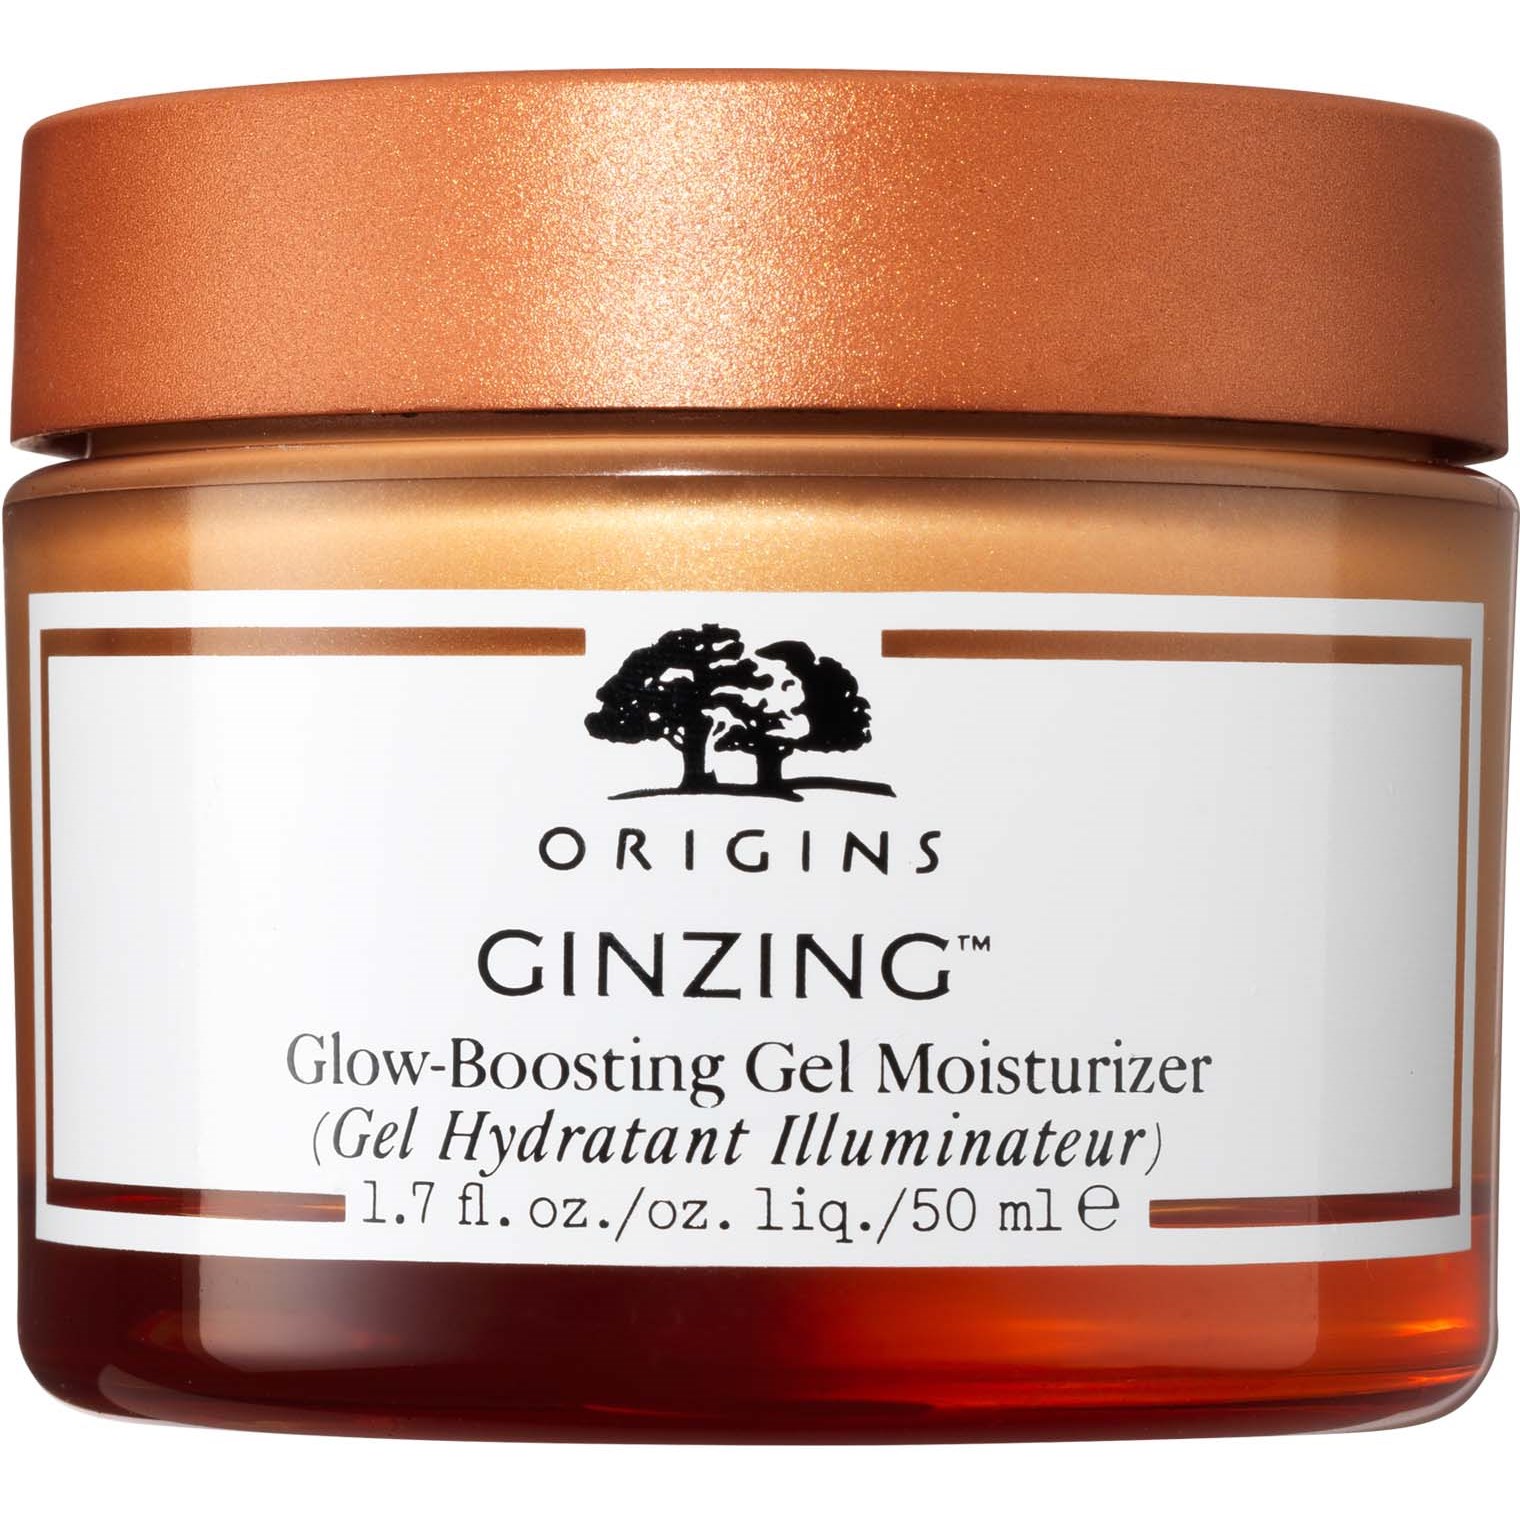 Origins GinZing Glow-Boosting Gel Moisturizing 50 ml